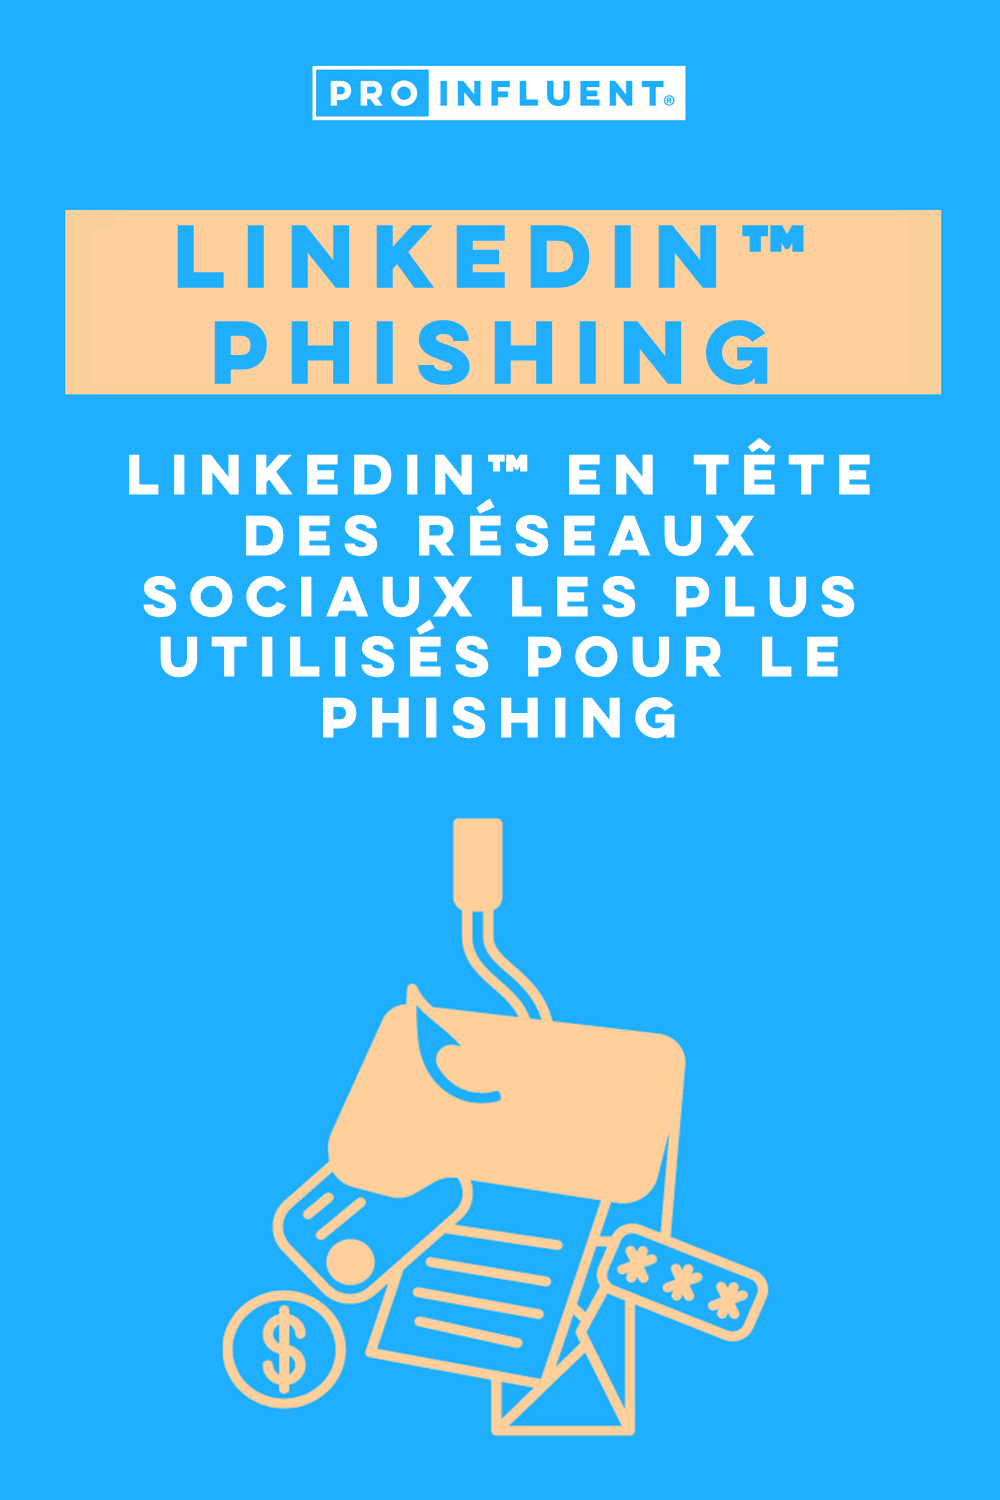 LinkedIn™ phishing